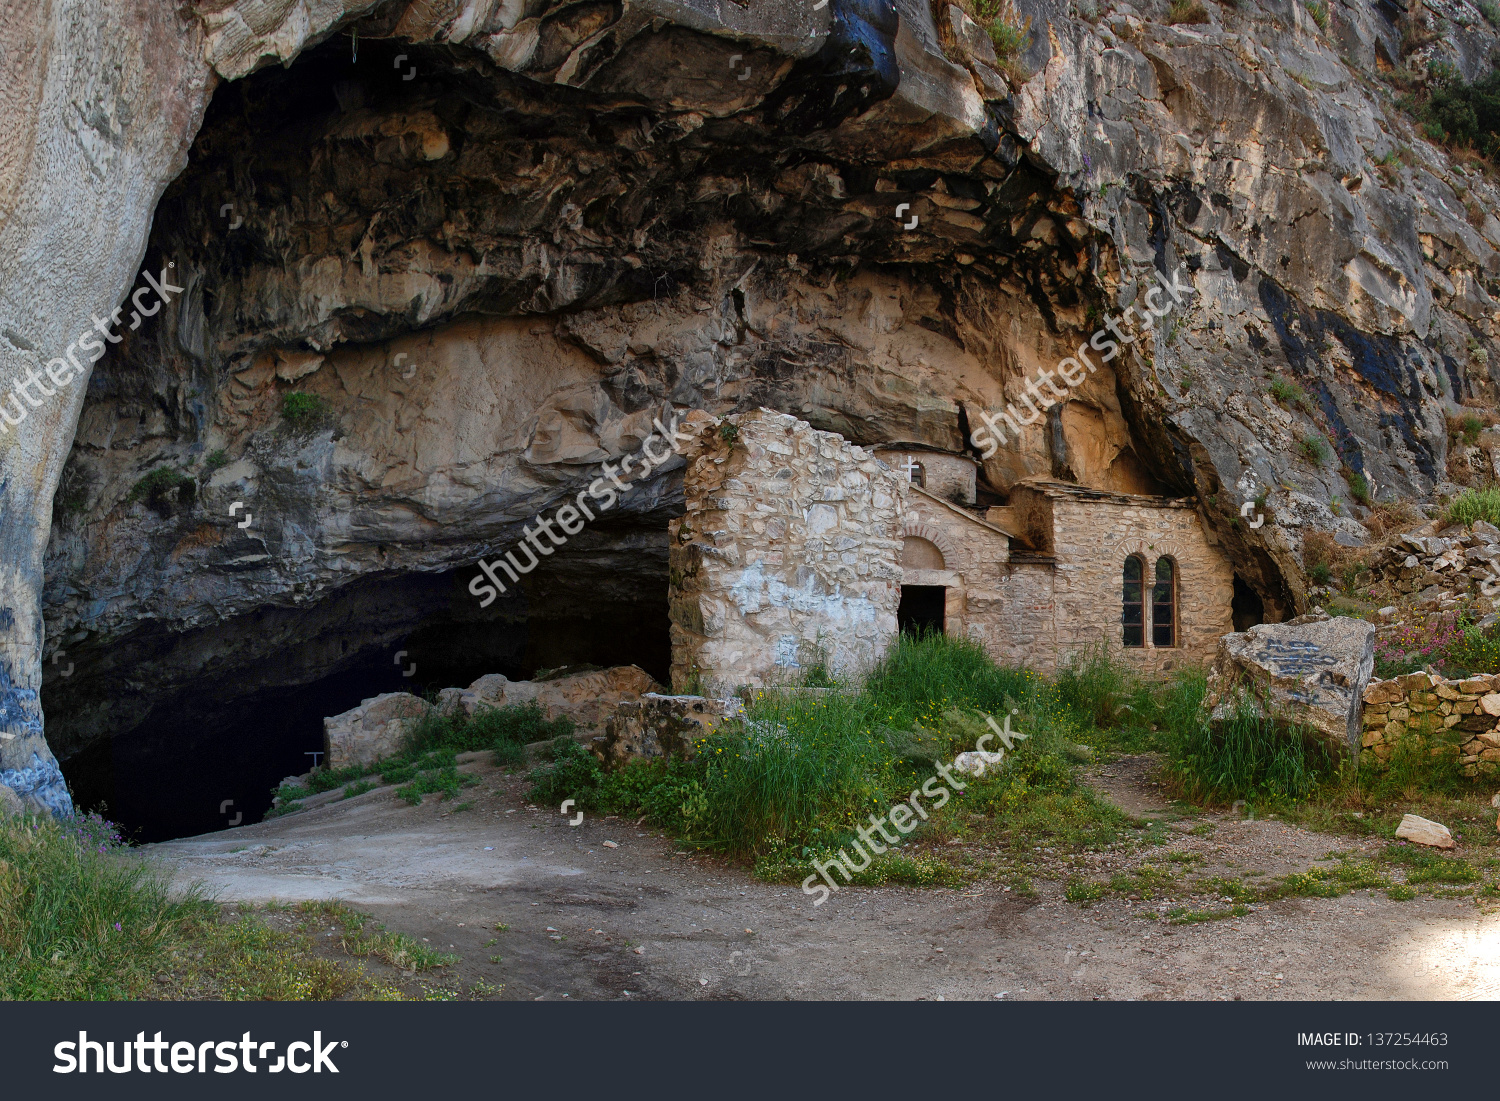 Daveli Cave Penteli Stock Photo 137254463 : Shutterstock.